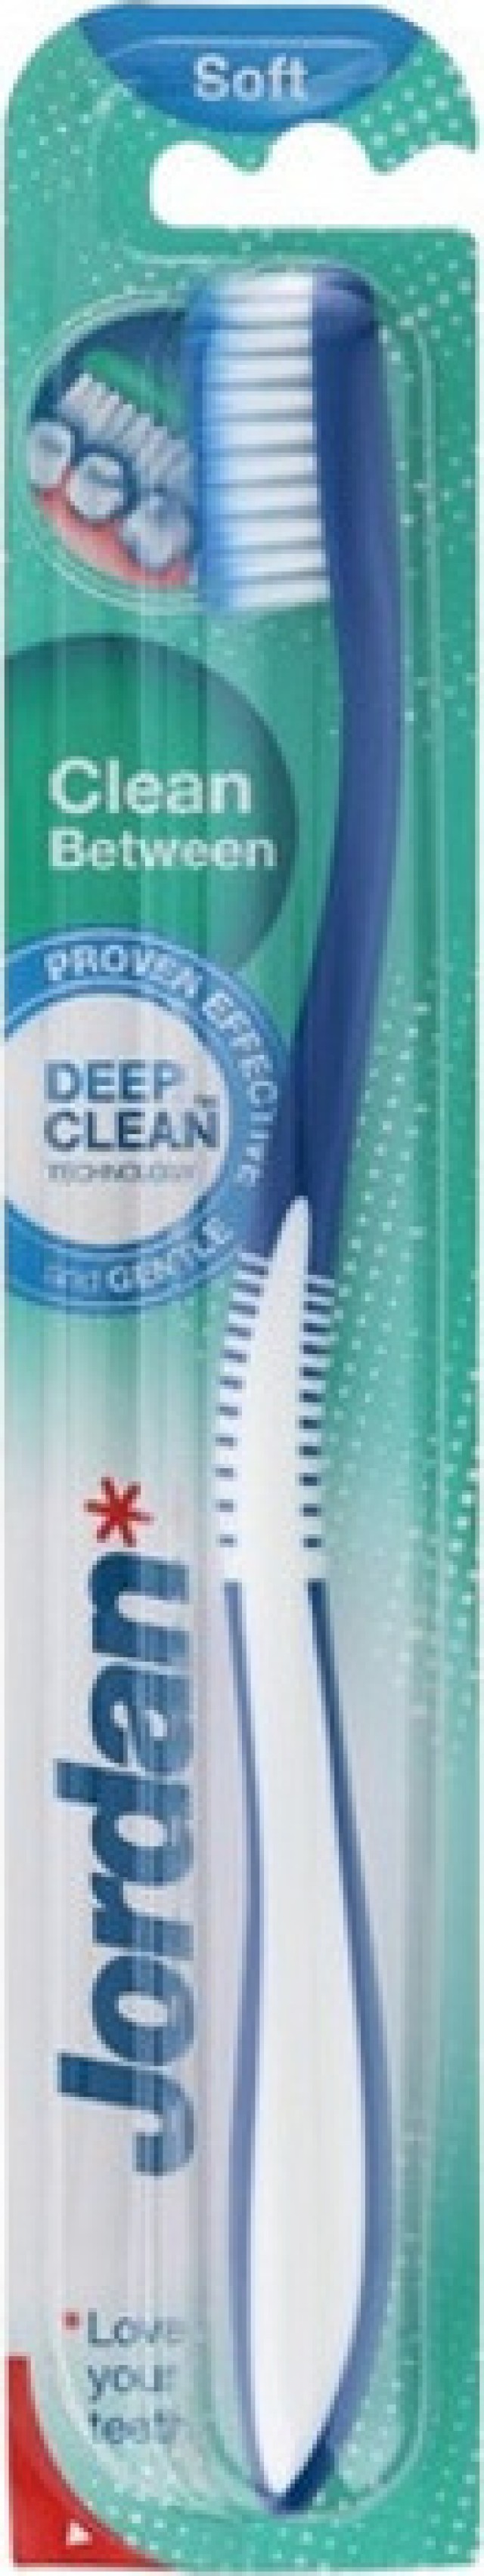 Jordan Οδοντόβουρτσα Clean Between Soft,1 τεμάχιο Μπλε